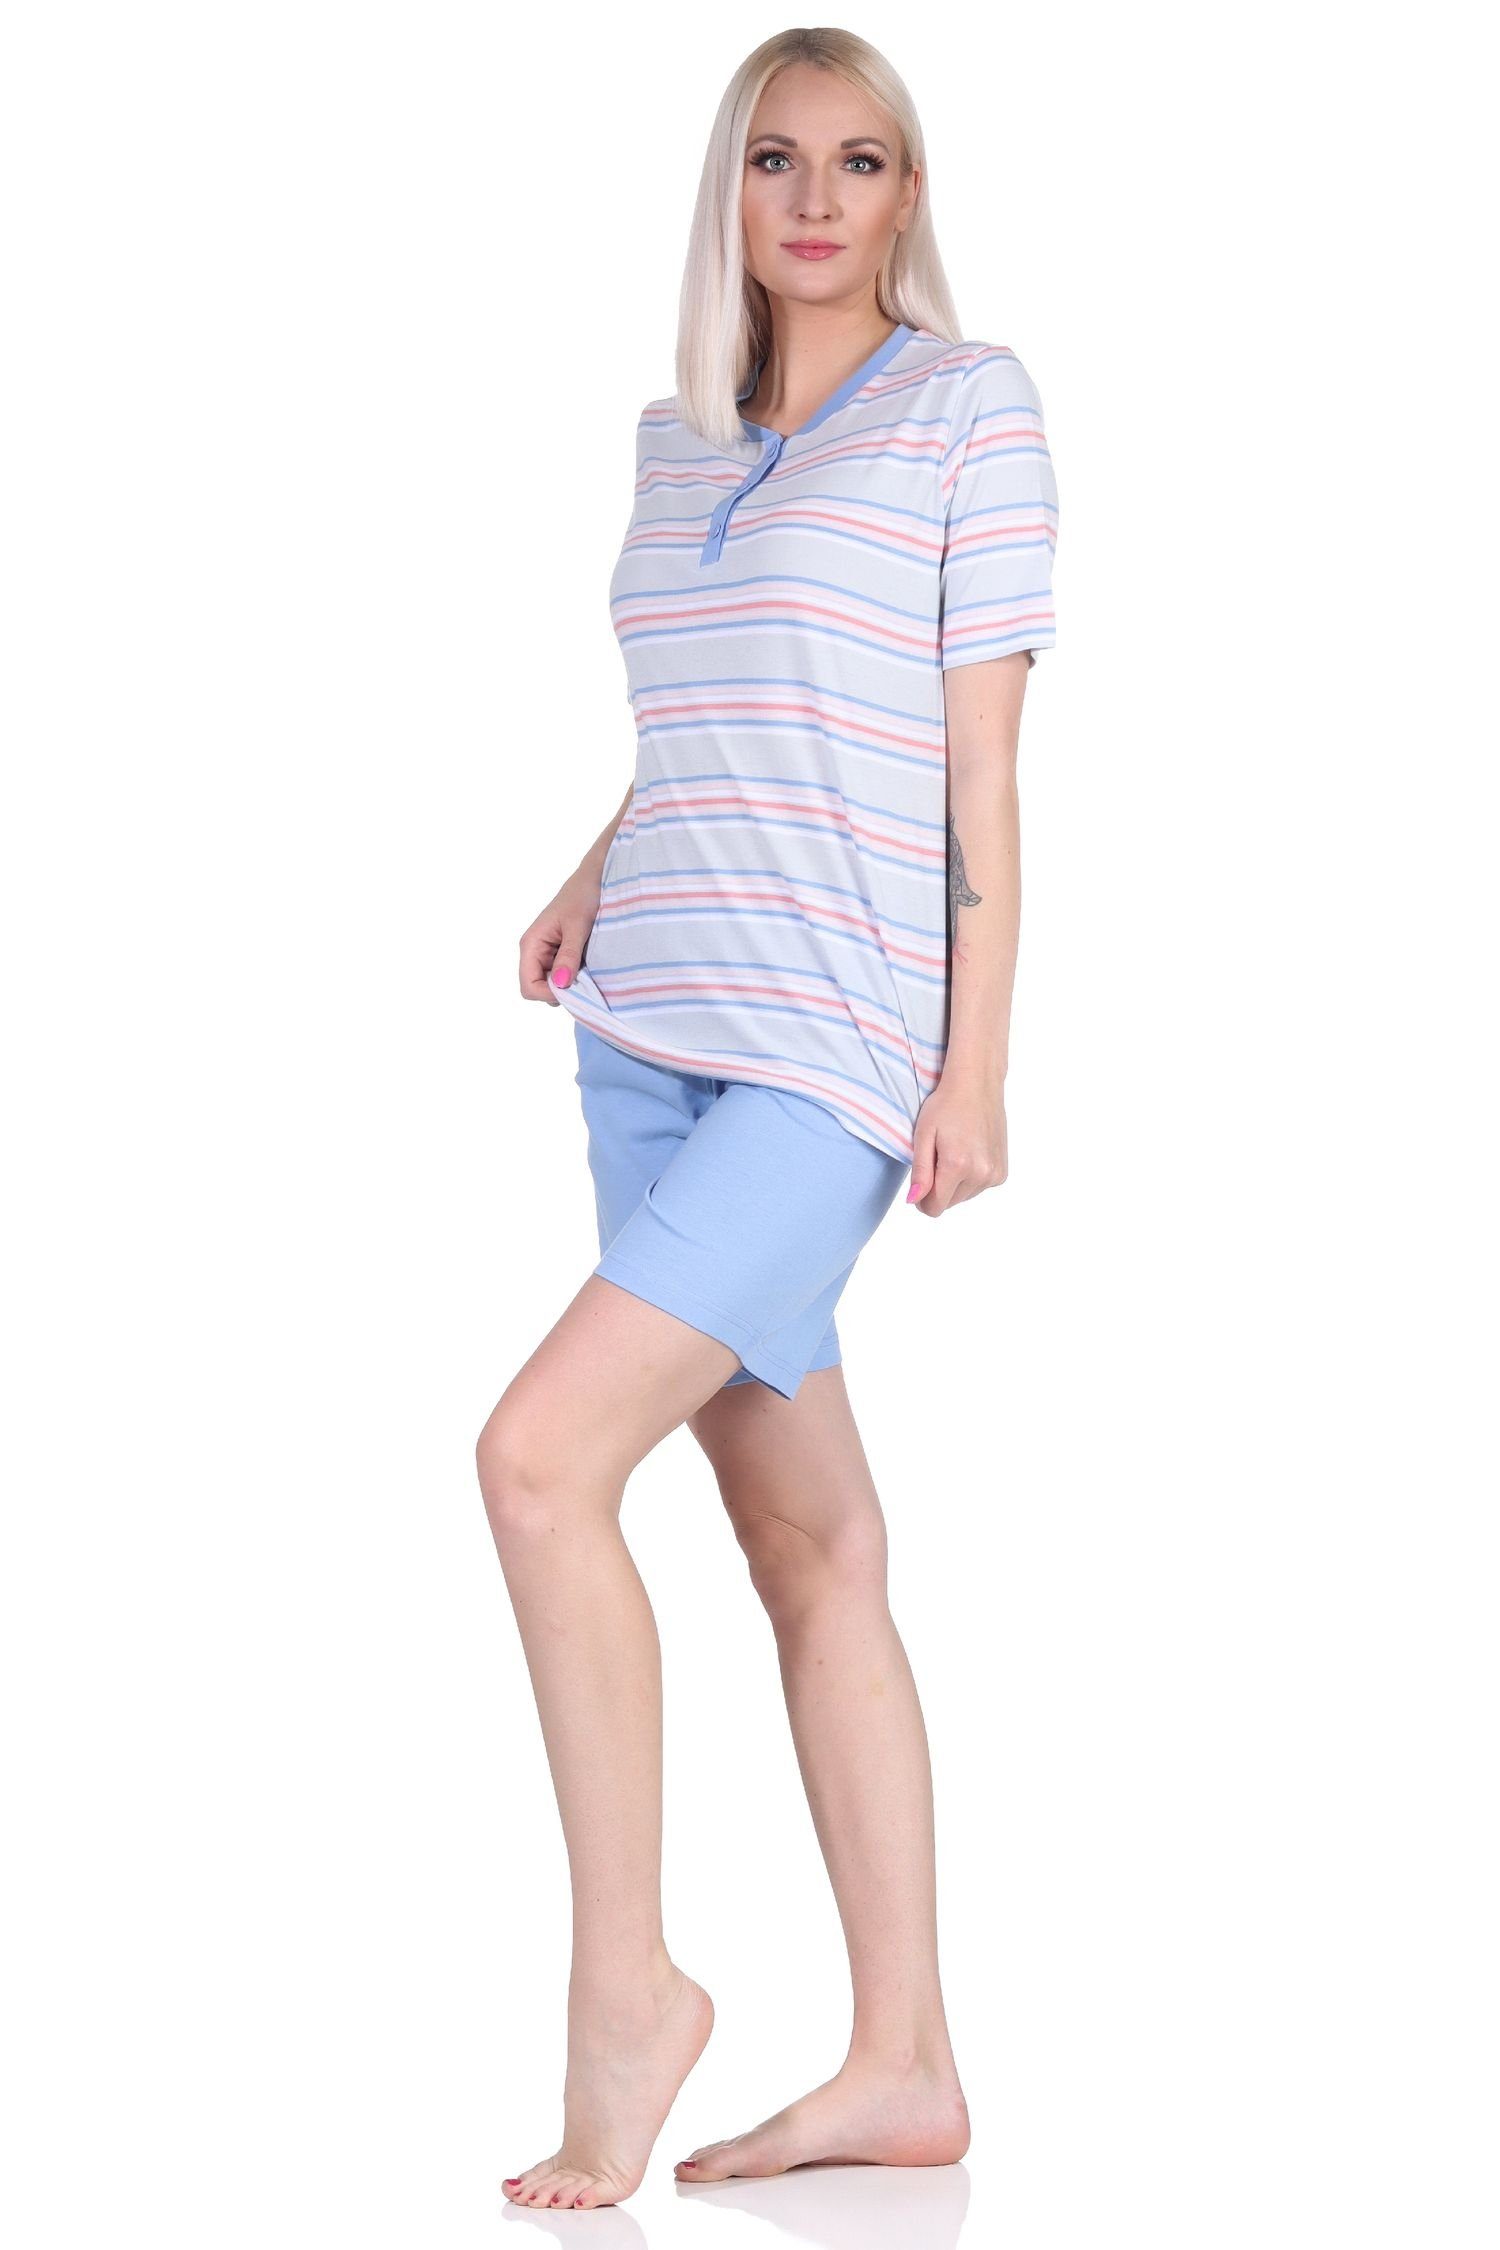 kurzarm Pyjama Schlafanzug in pastellfarbenen Streifen Normann Shorty hellblau Damen Pyjama